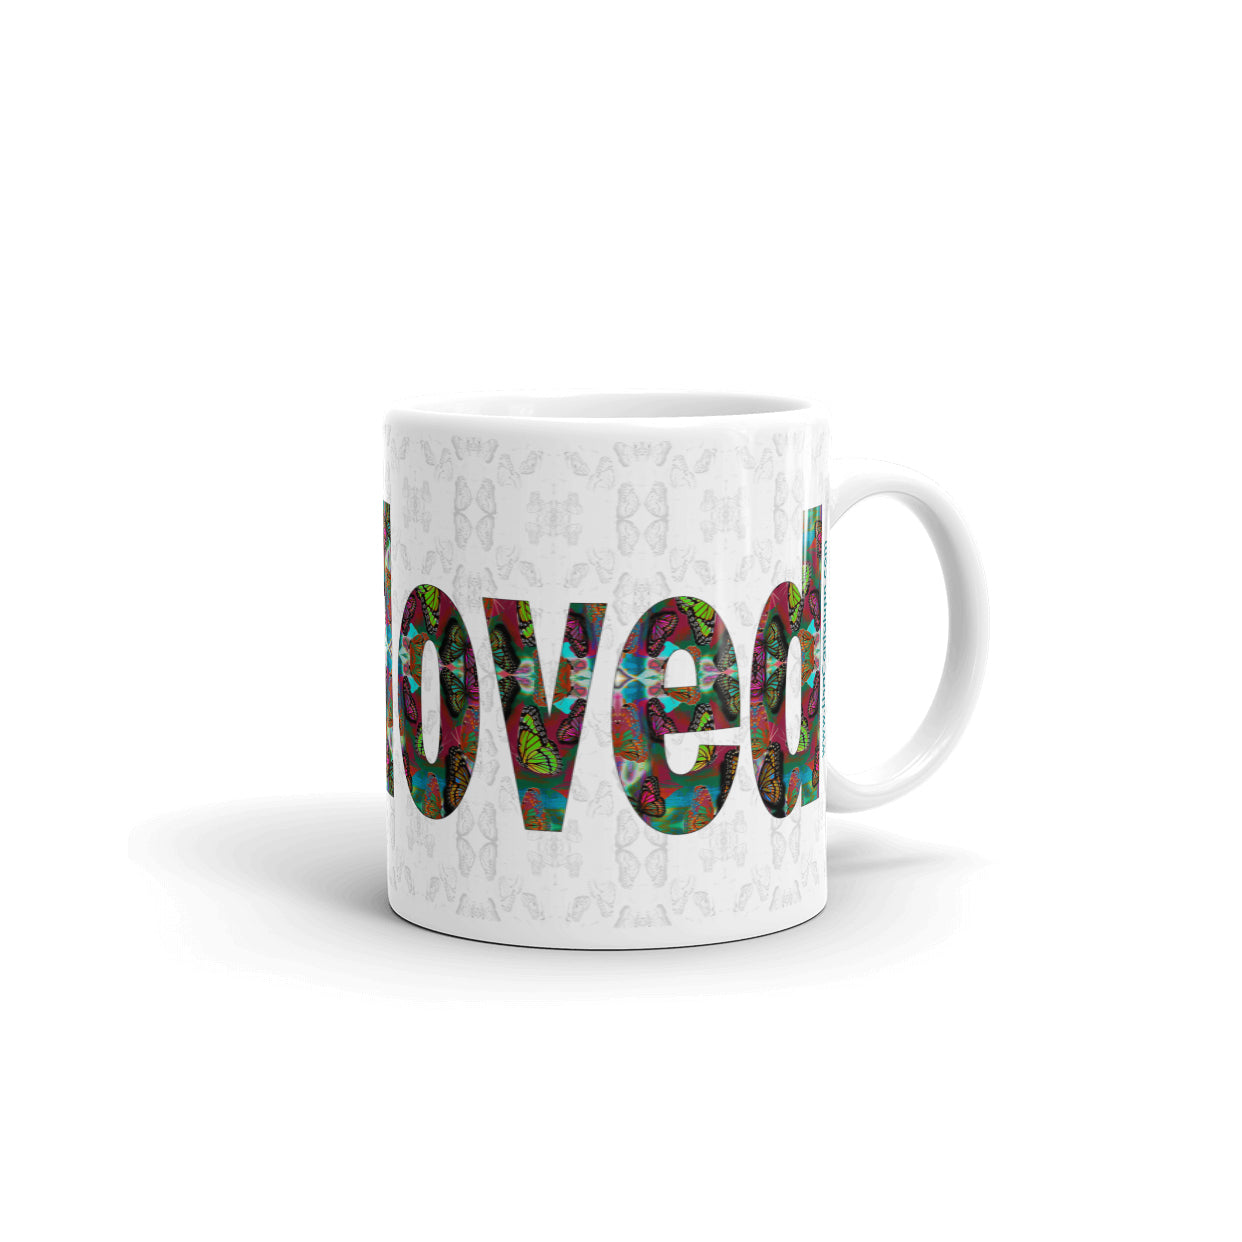 I am Loved ~ LOVE ETERNAL Ceramic Coffee Mug; 11 or 15 ounce, Colorful Butterflies, Printed Words, Word Art, Motivation Mug